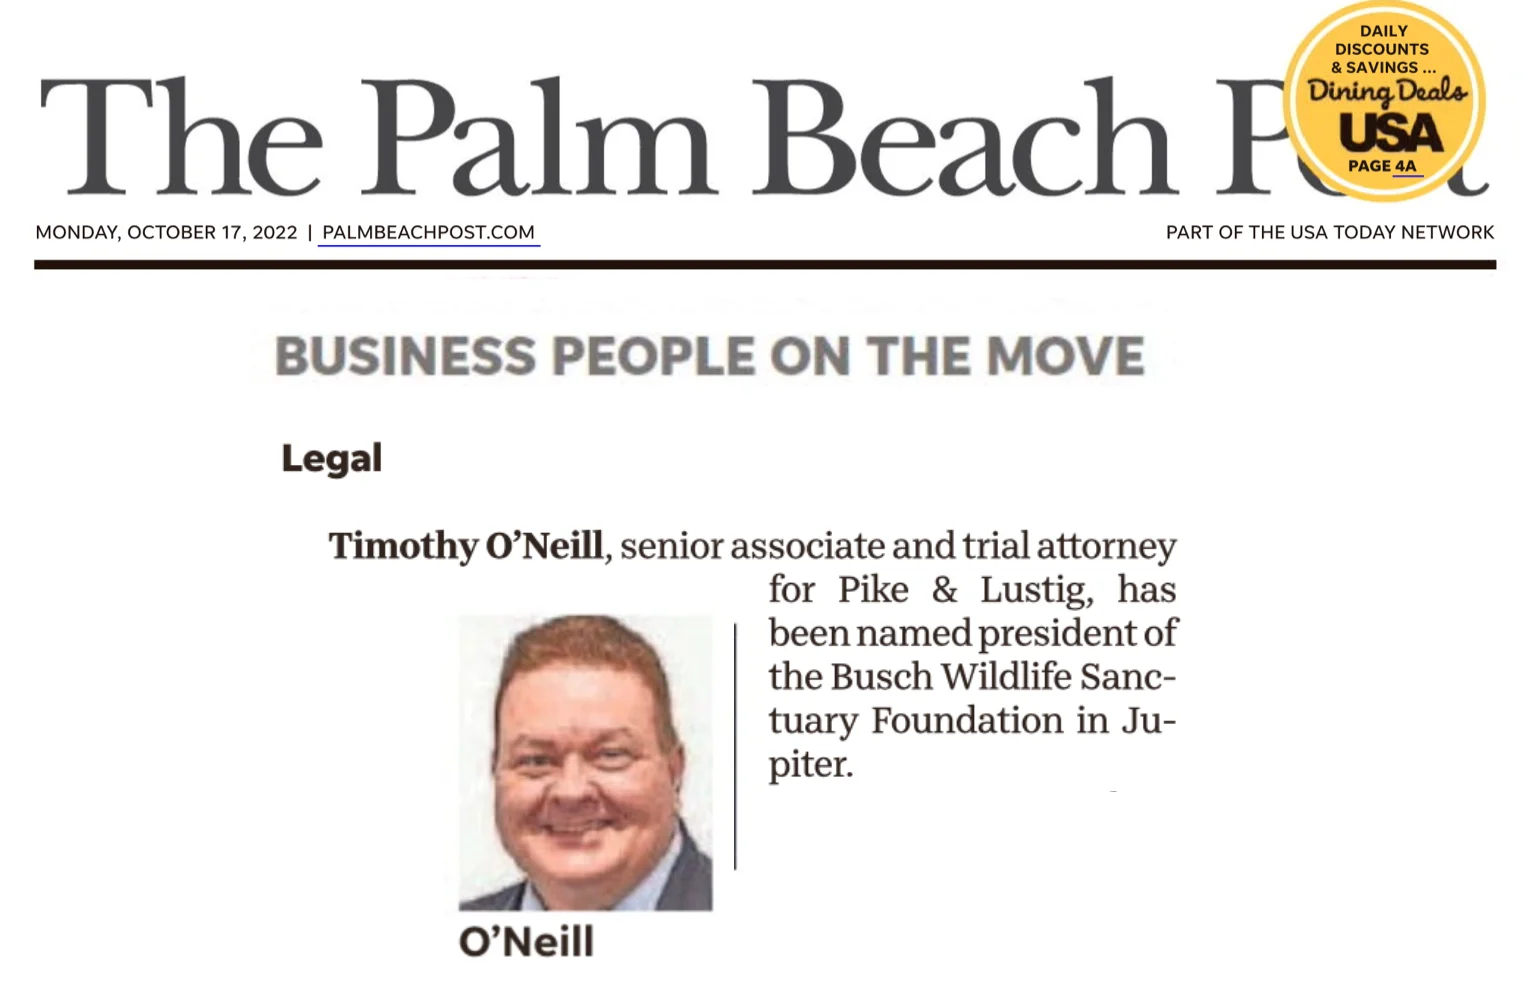 The Palm Beach - Timothy O'Neill named president